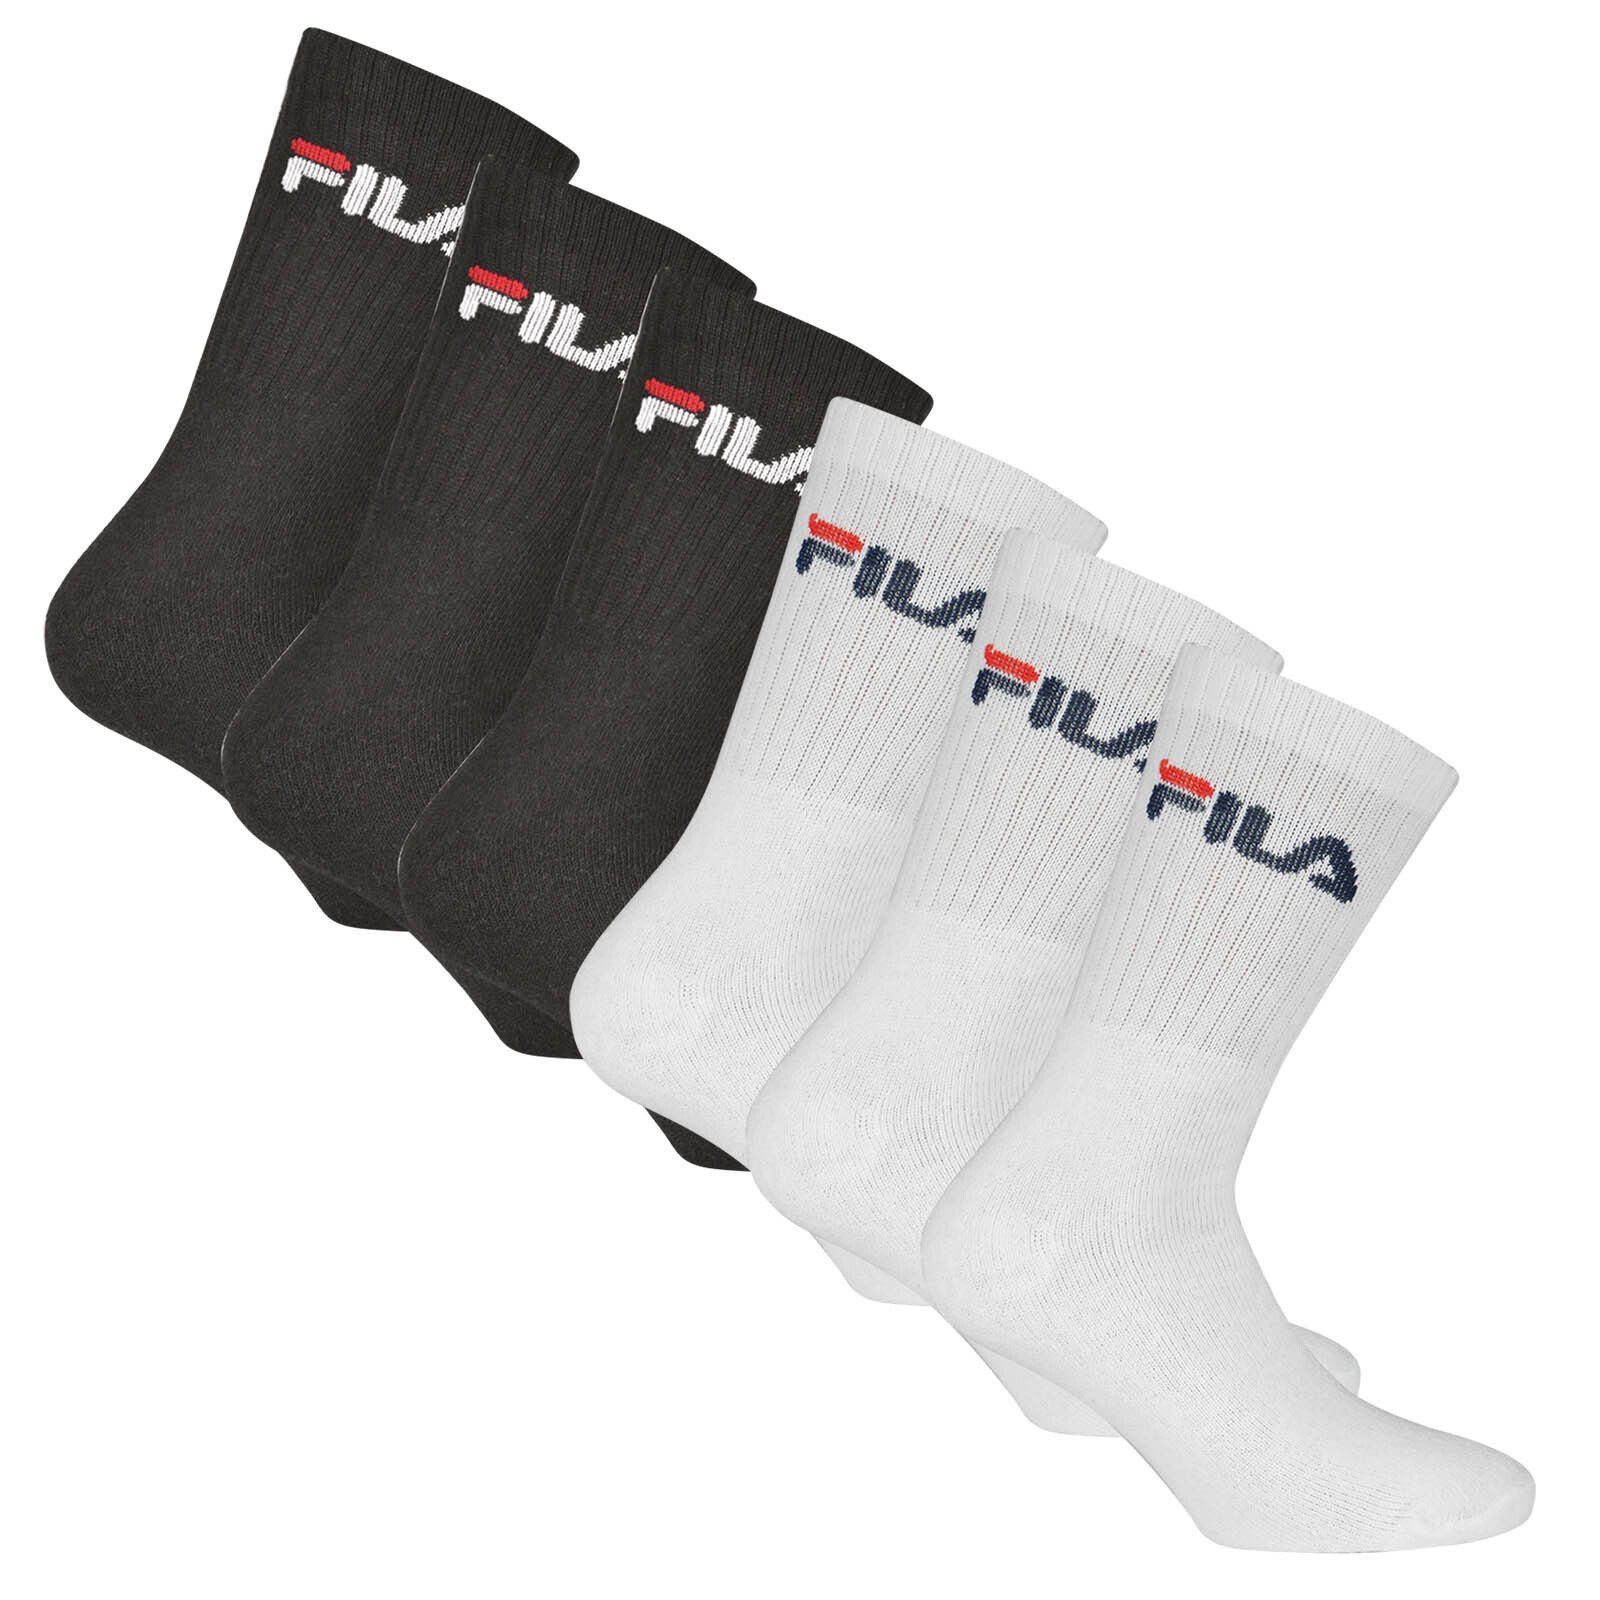 Schwarz/Weiß Fila - Frottee Crew Sportsocken Socks, Pack 6er Unisex Socken,